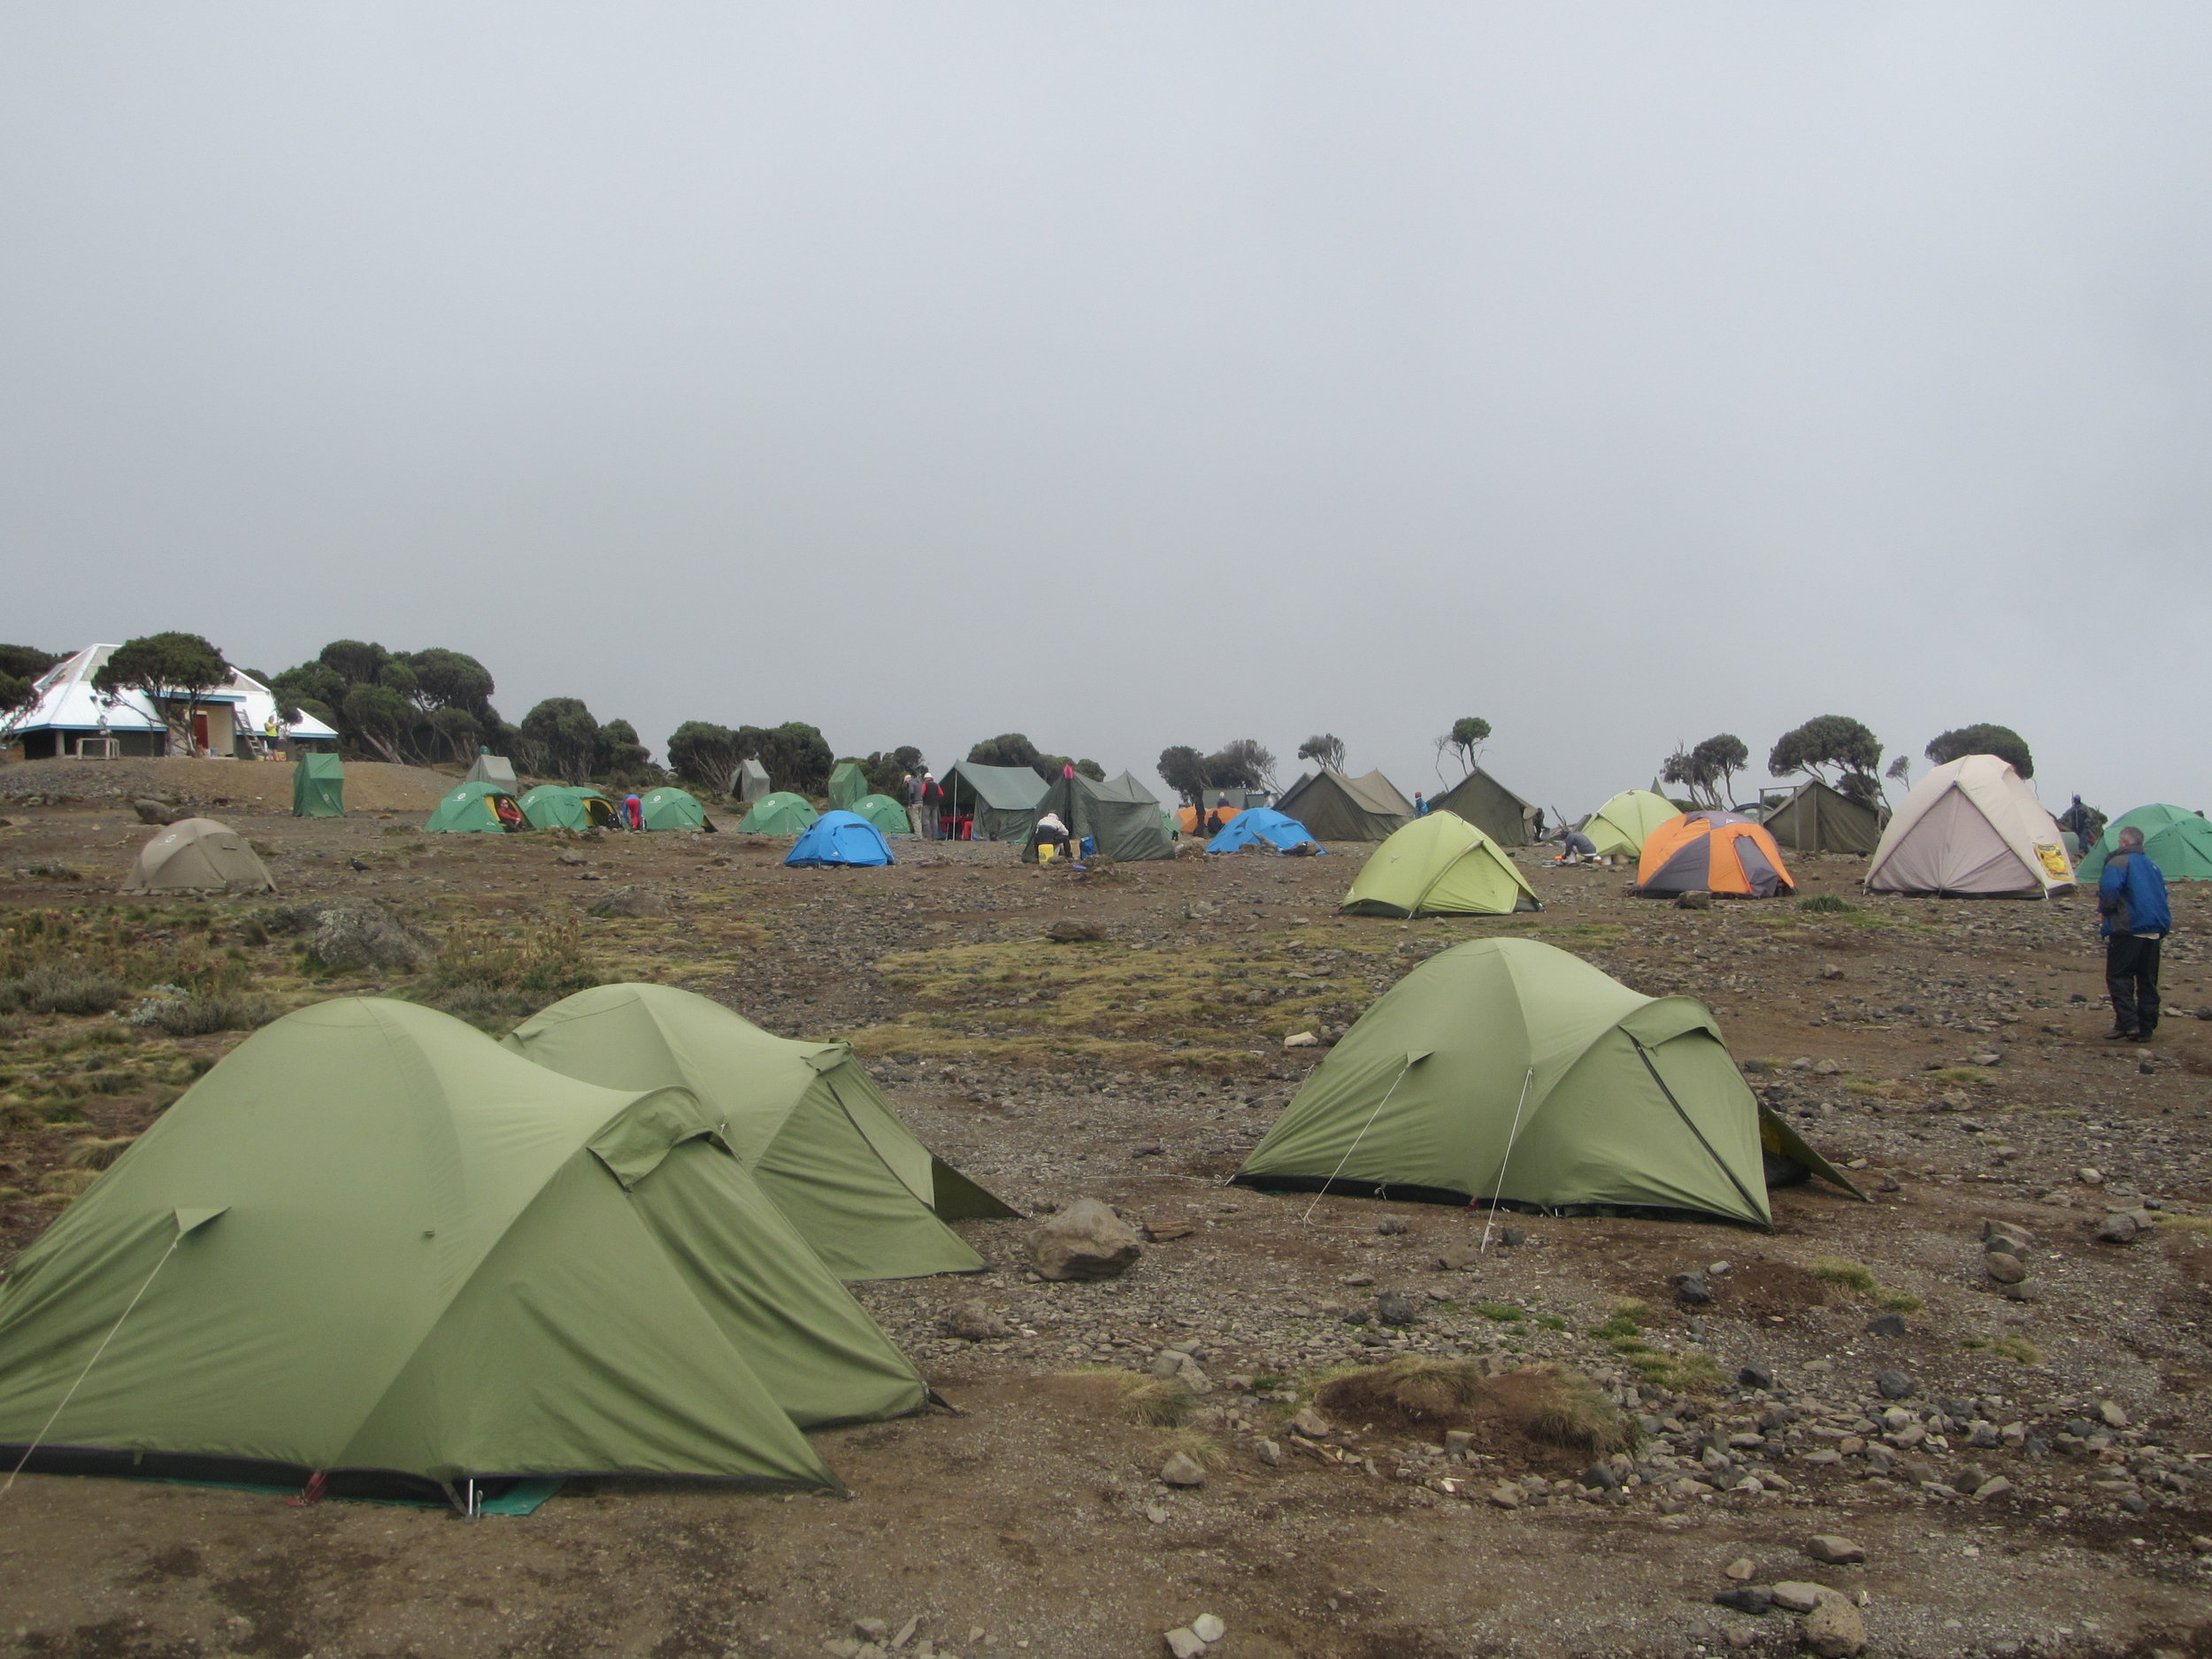  Tips for climbing Mount Kilimanjaro 